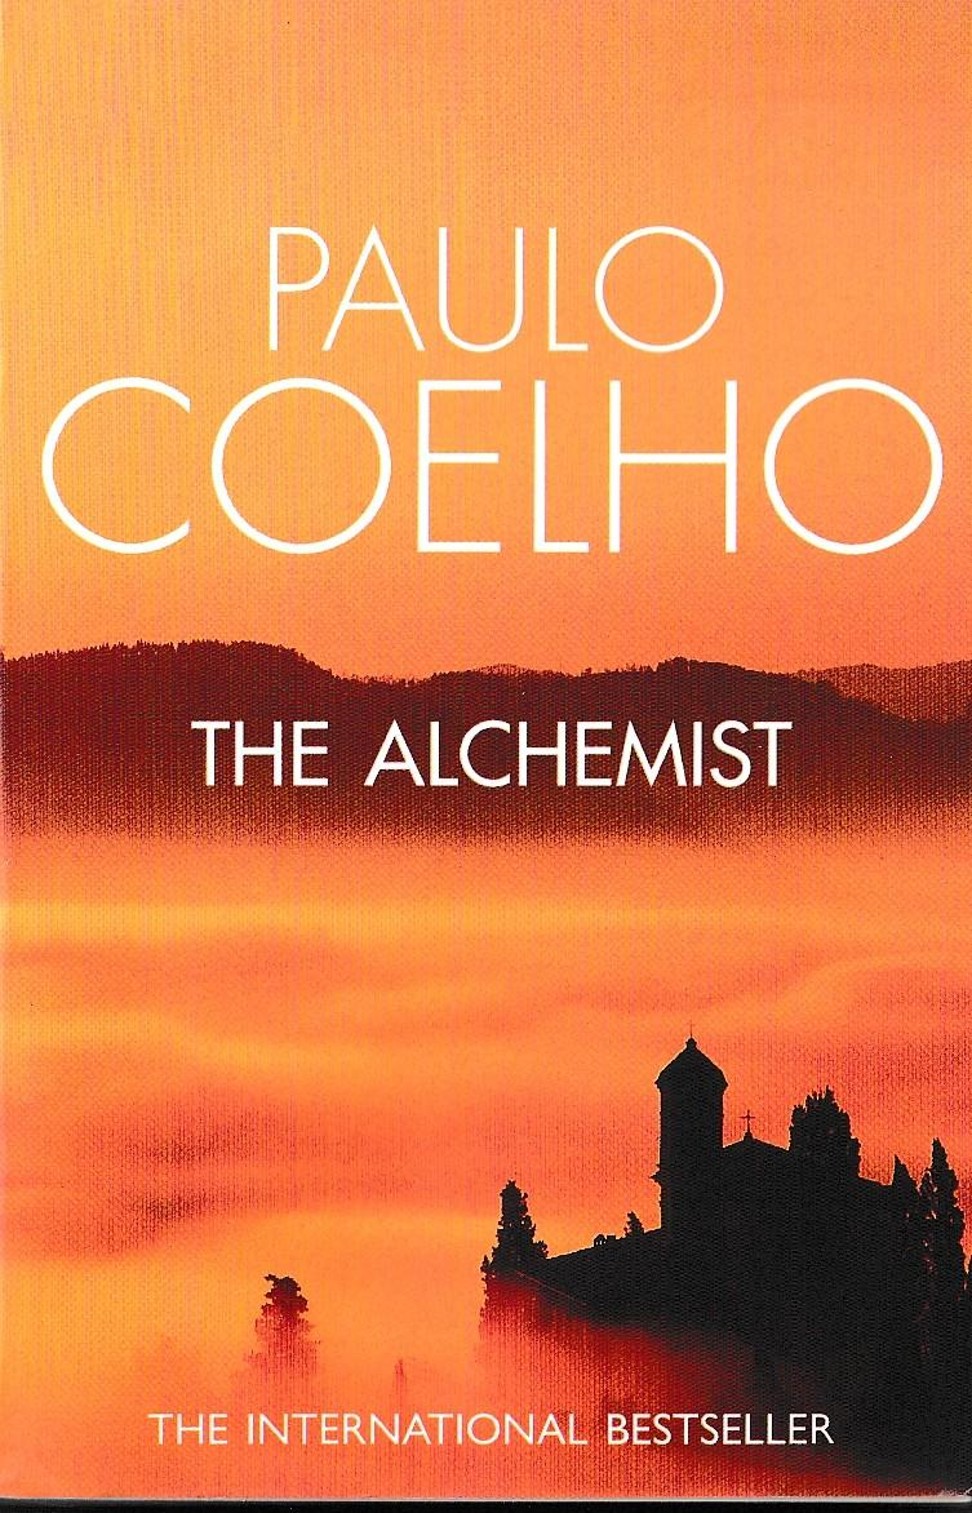 The Alchemist by Paulo Coelho.